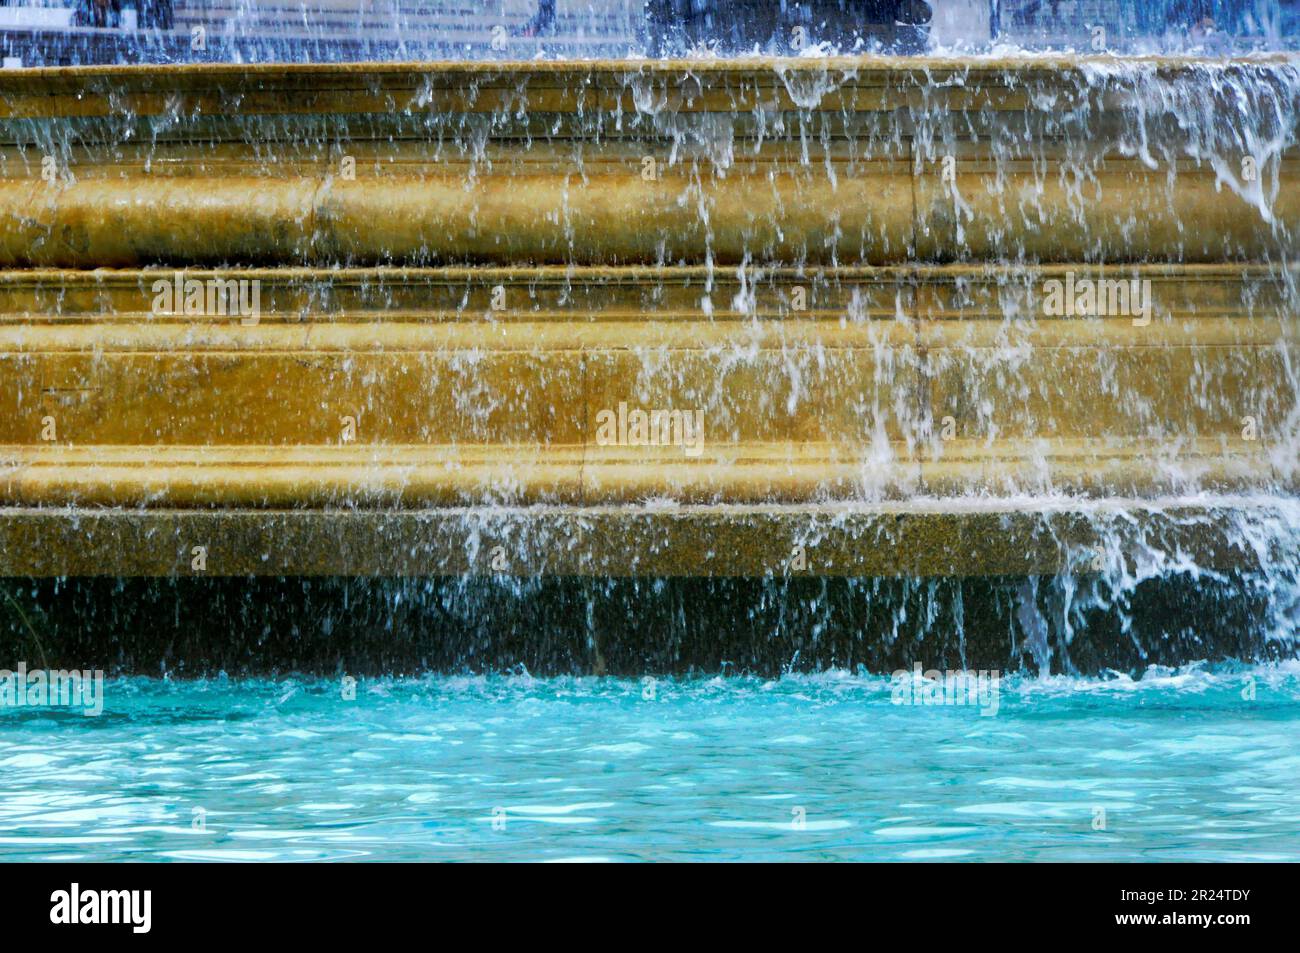 Fountains in Trafalgar Square London Stock Photo